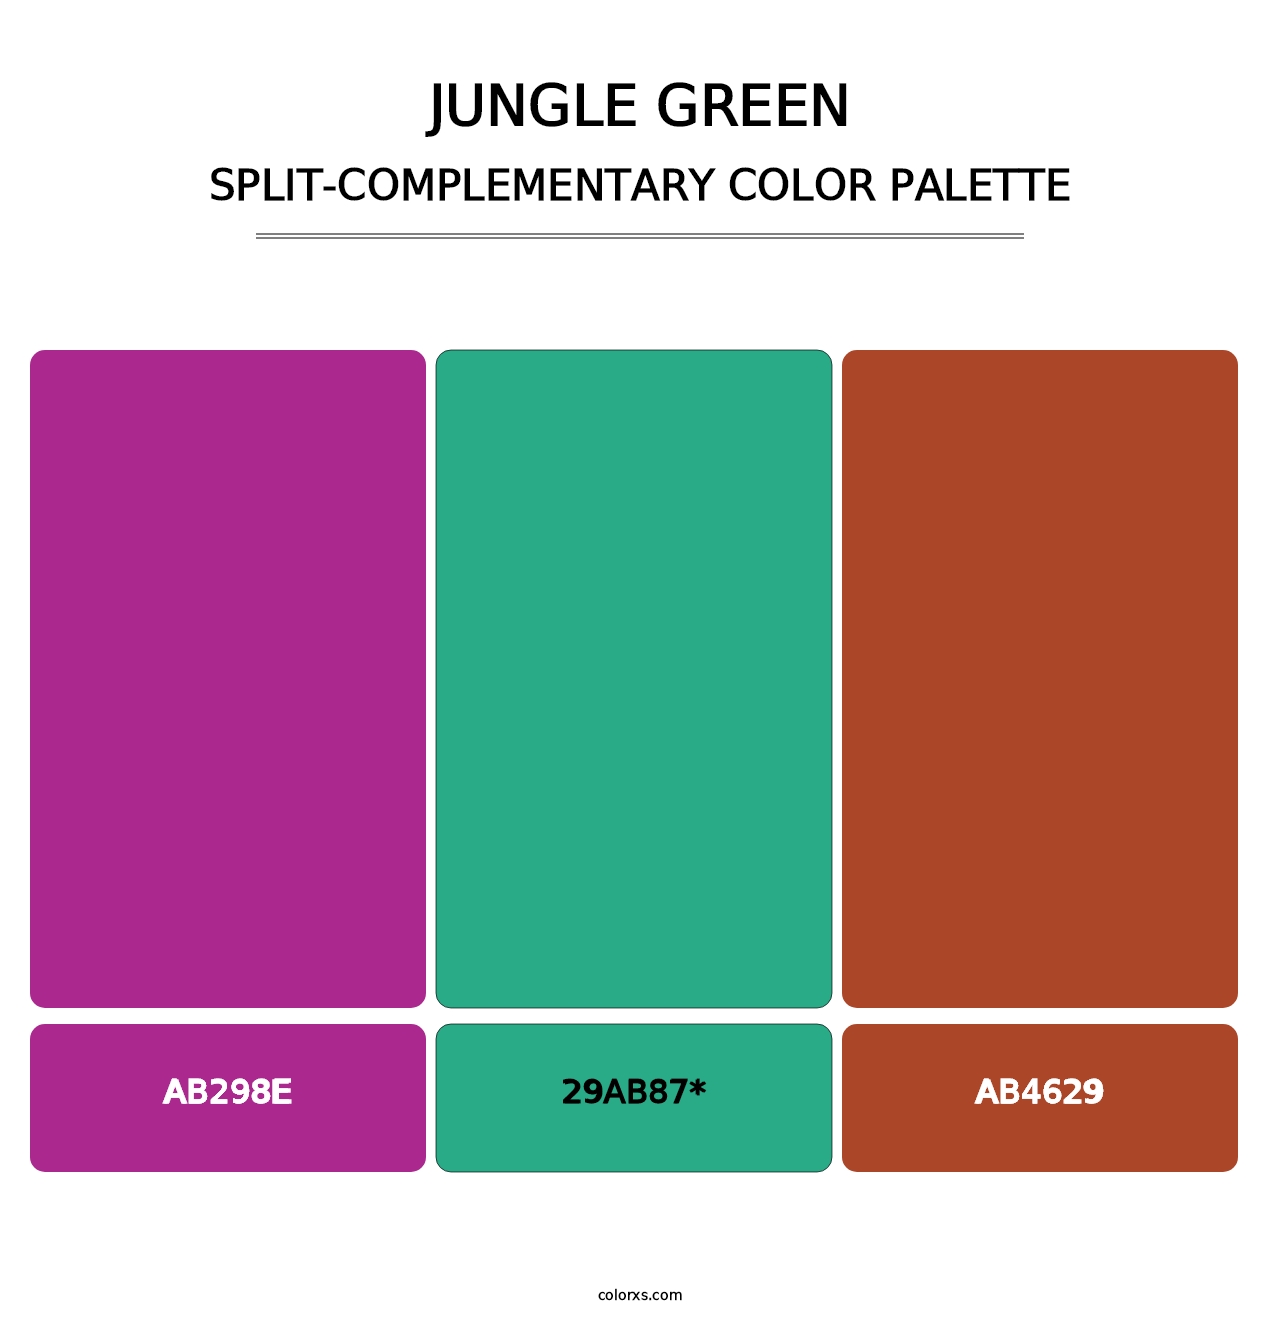 Jungle Green - Split-Complementary Color Palette